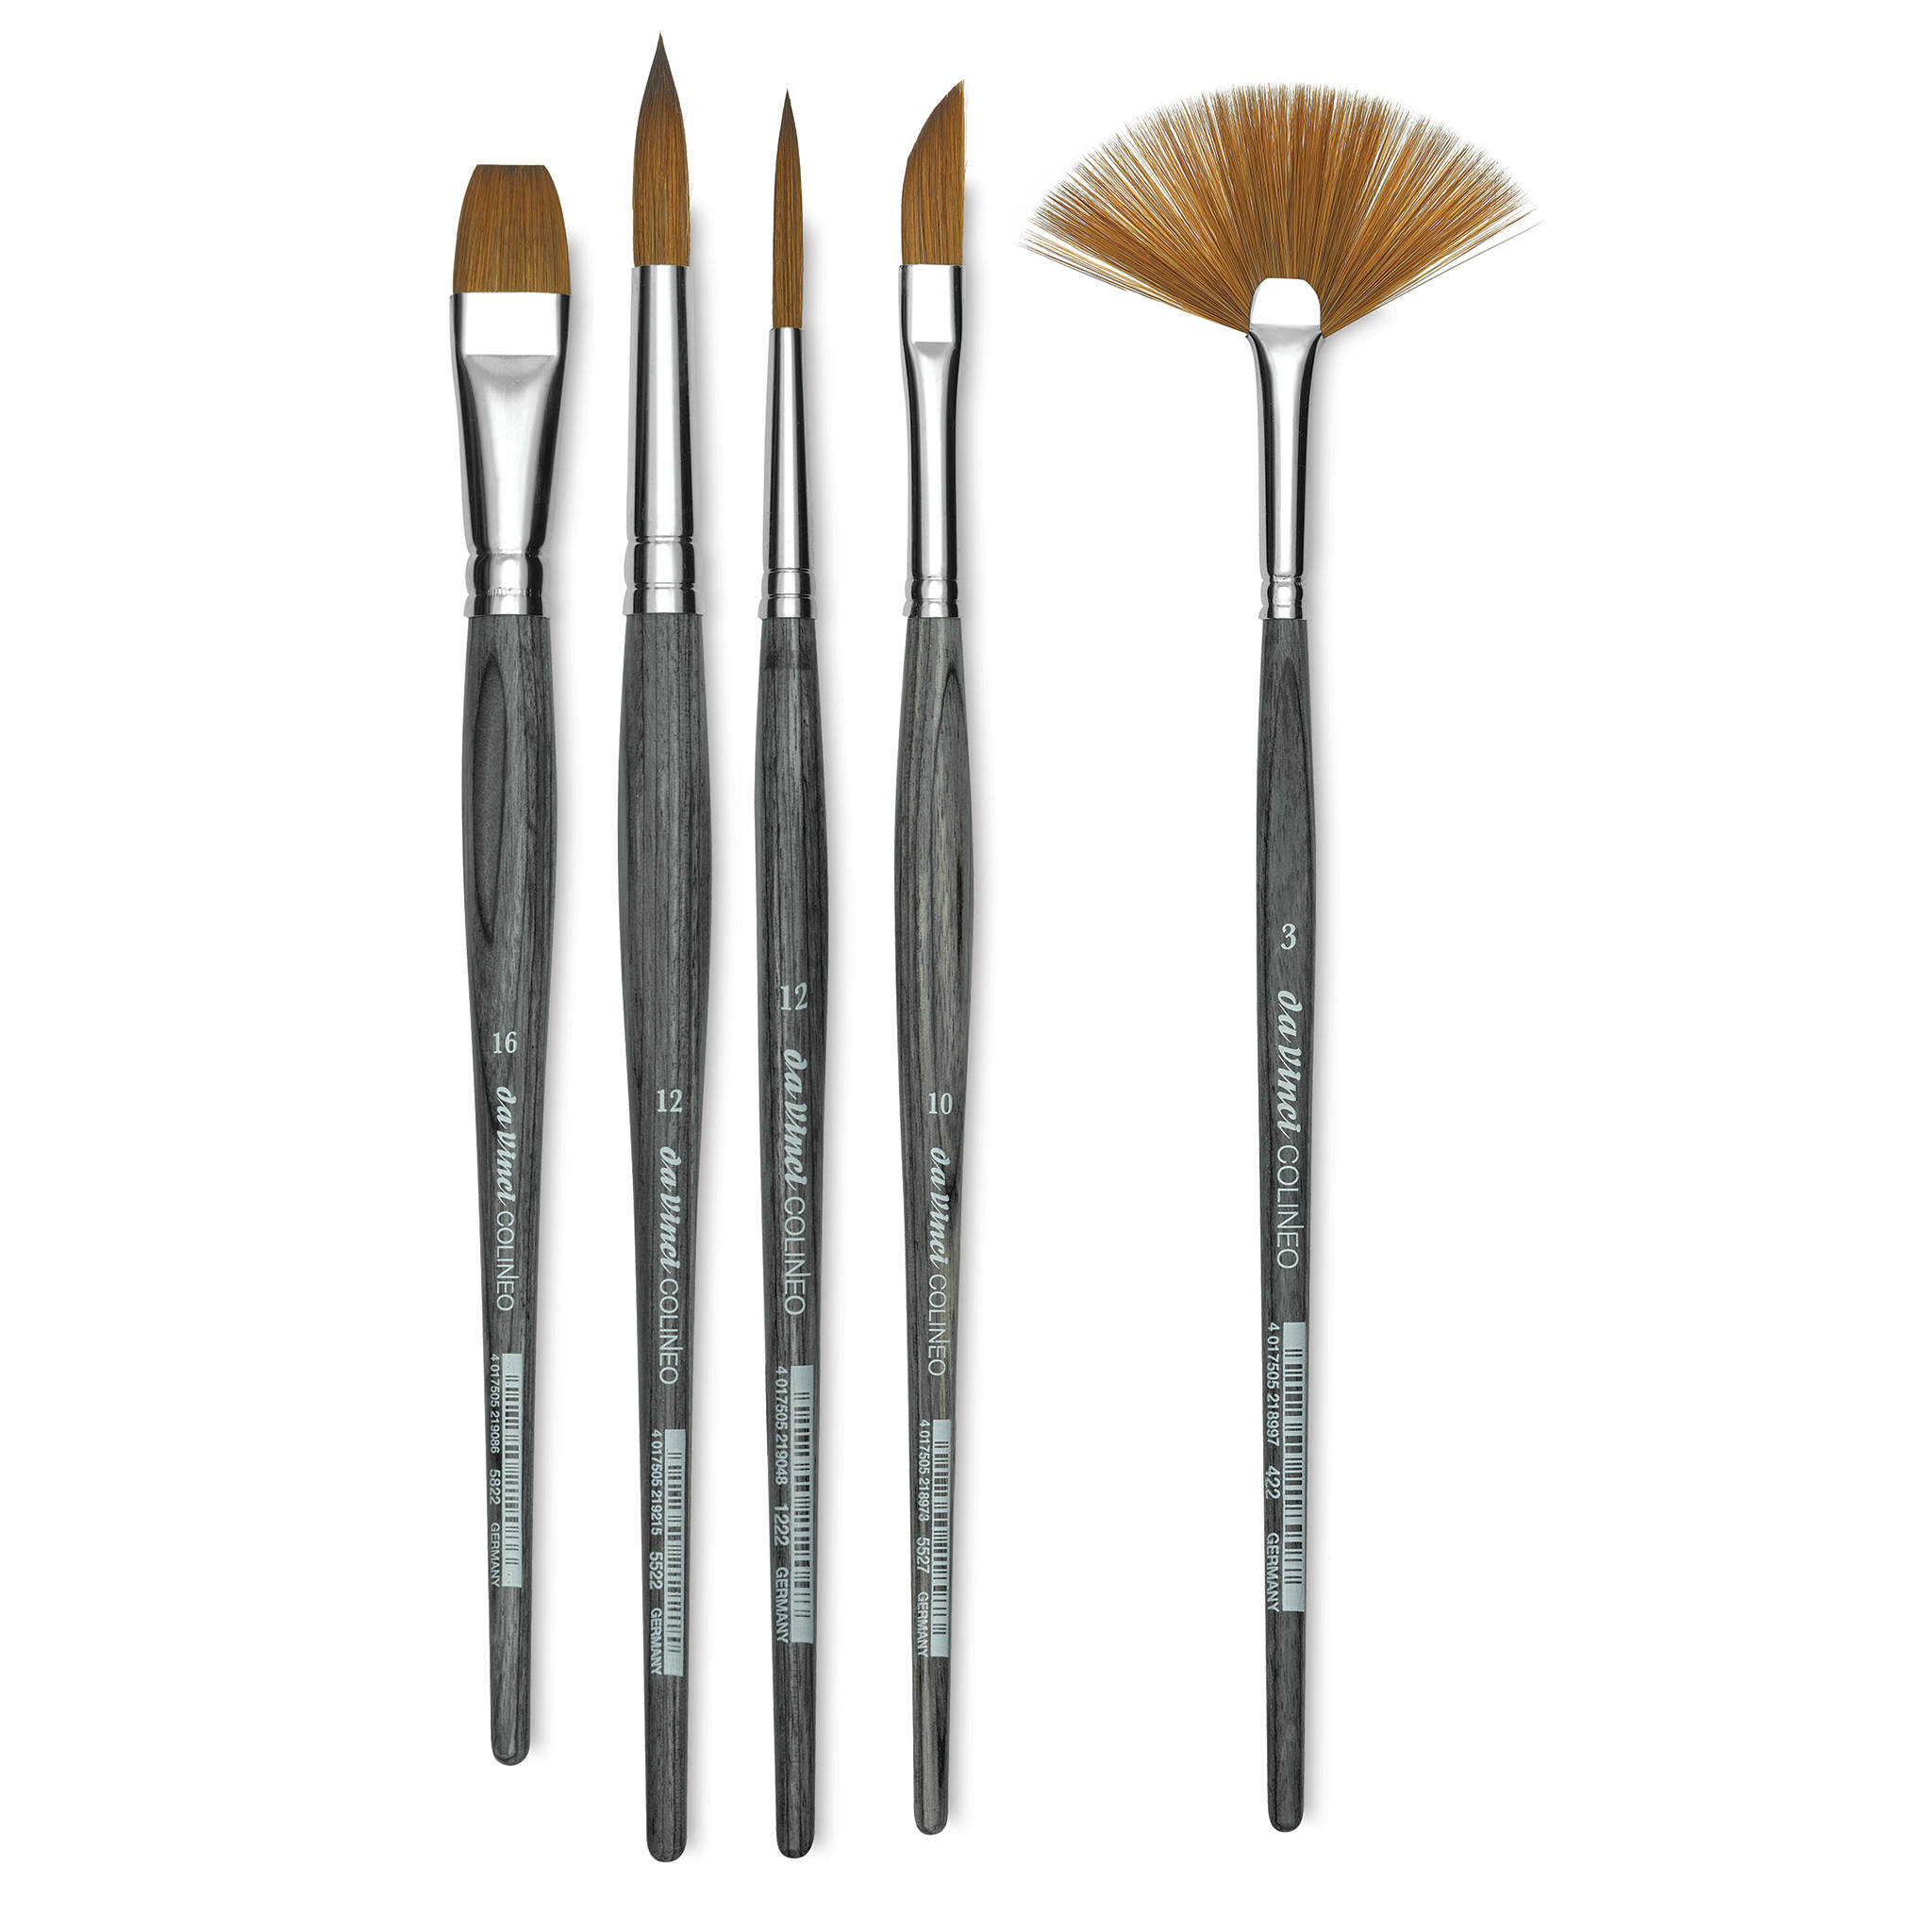 Mr. Pen- Miniature Paint Brushes, 9 Pcs, Detail Paint Brush Set, Fine Paint  Brush, Mini Paint Brushes, Thin Paint Brushes, Tiny Paint Brushes, Micro